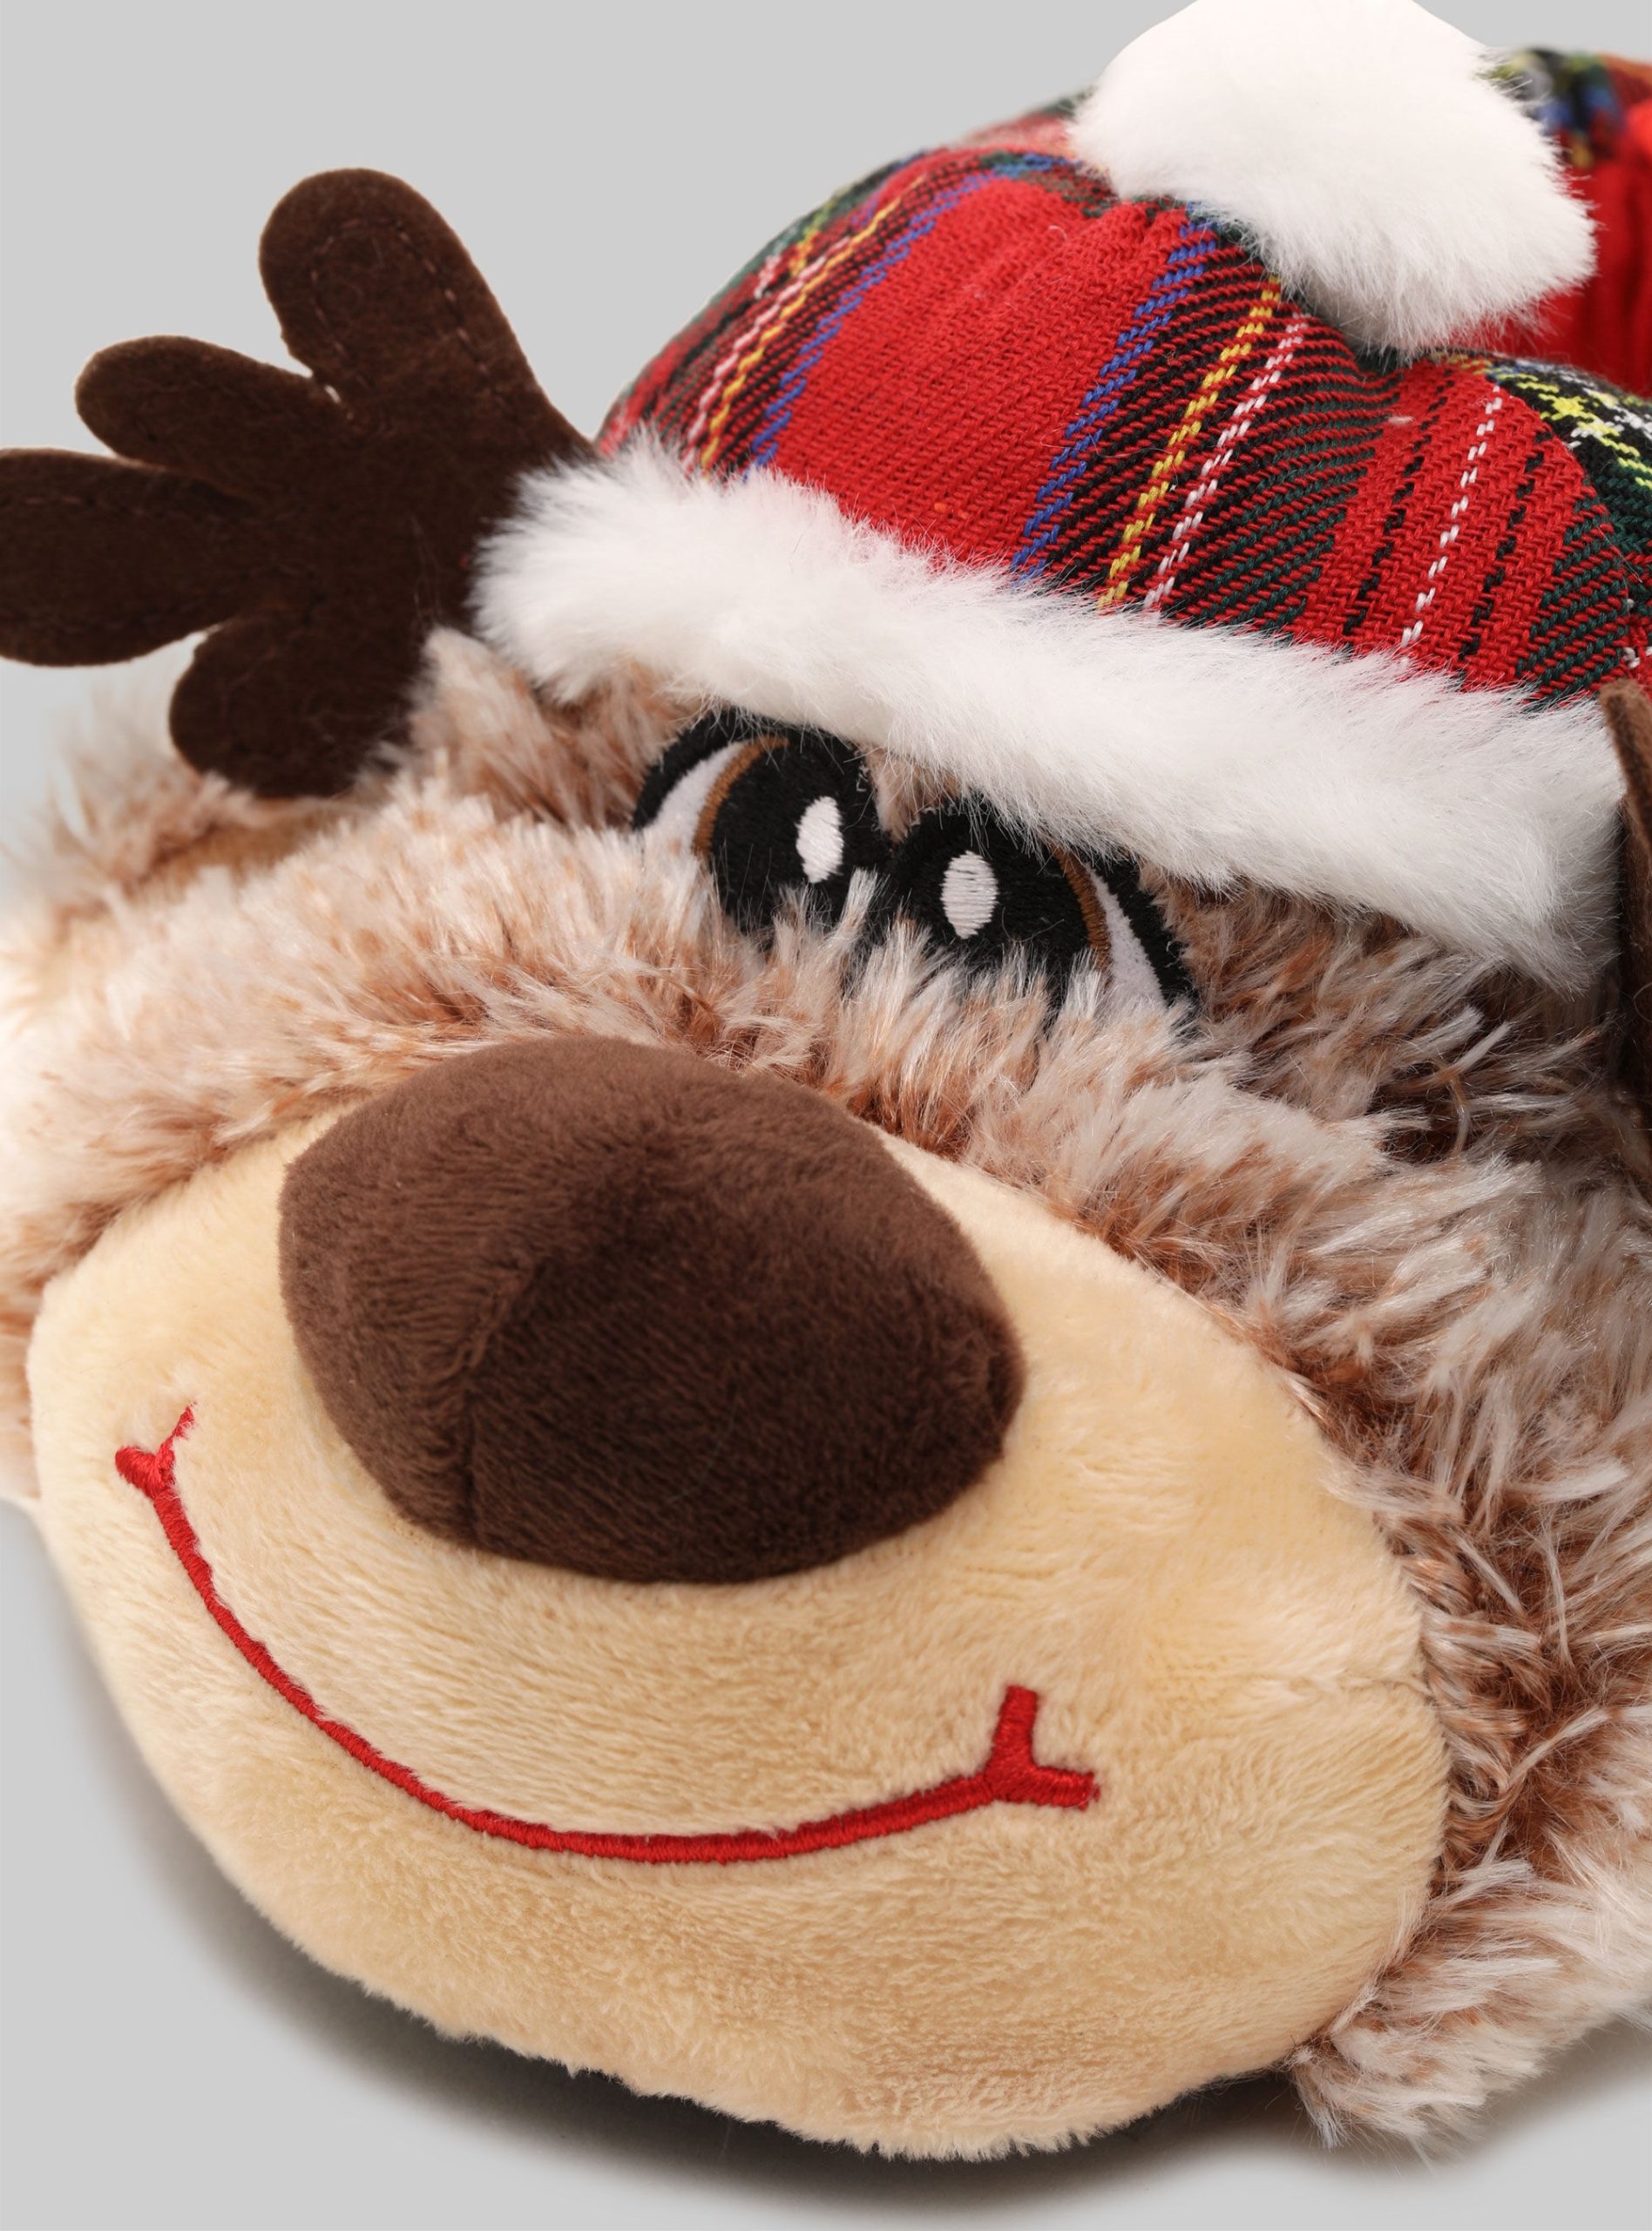 Das Günstigste Alcott Männer Mini Me Reindeer Slippers Christmas Collection Schuhe Rein Reindeer – 2